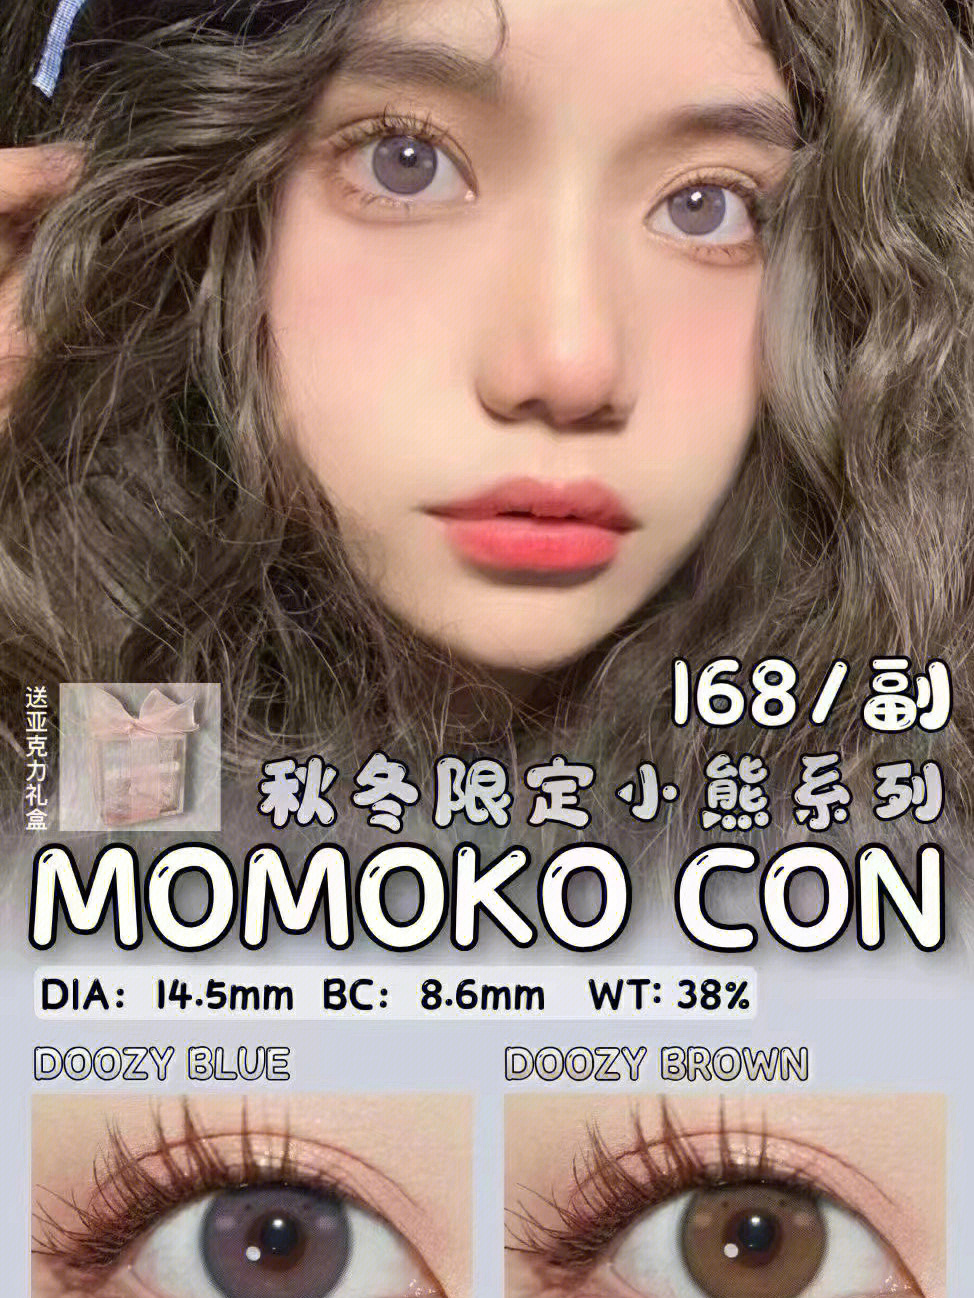 momoko真名图片